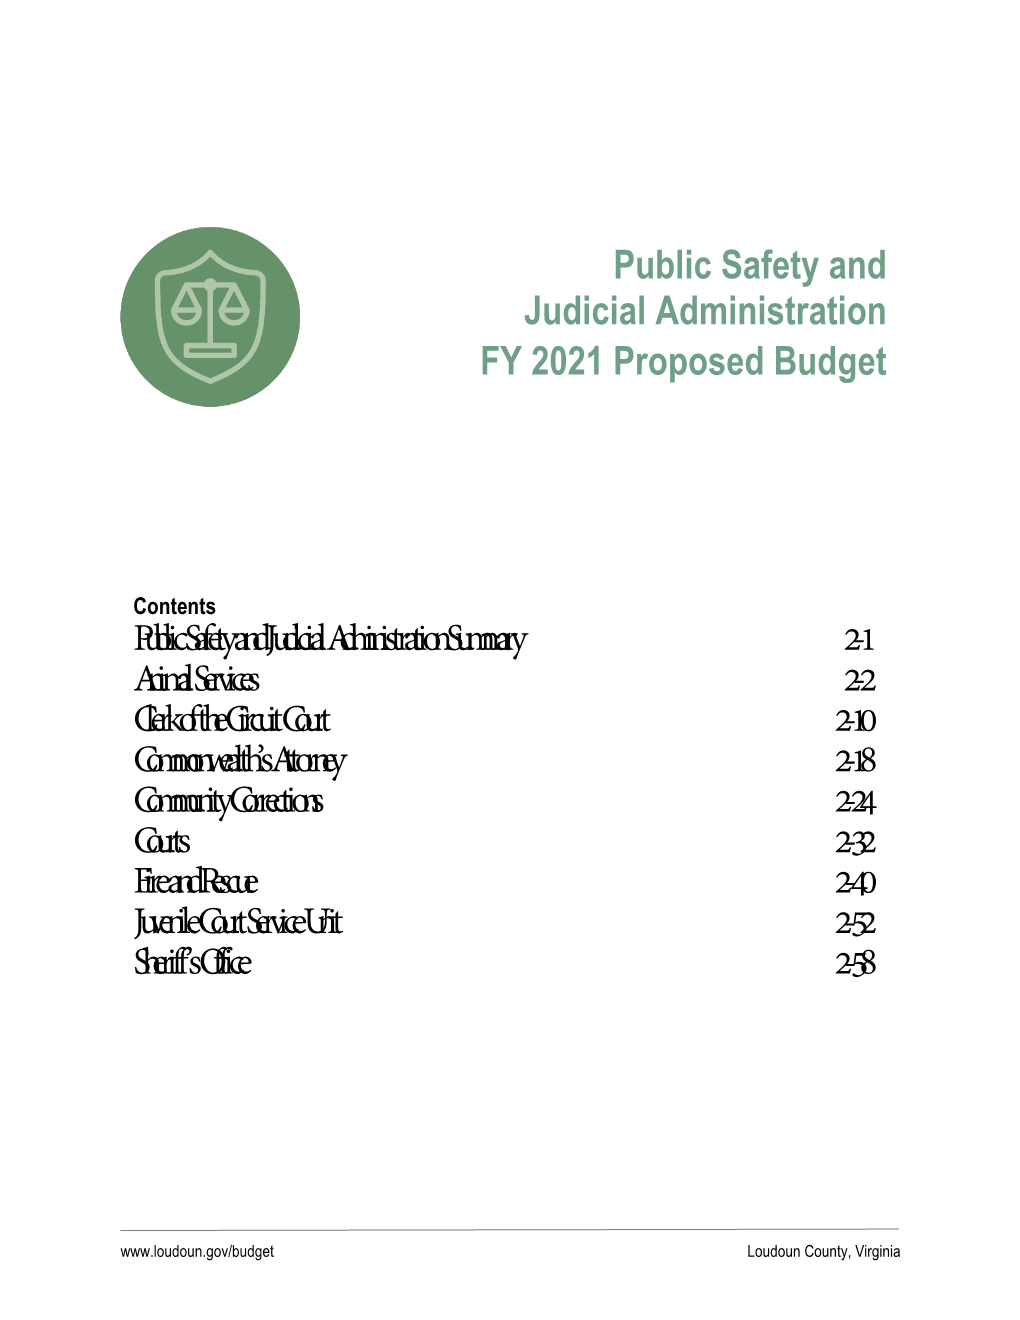 FY 2021 Proposed Budget, Volume